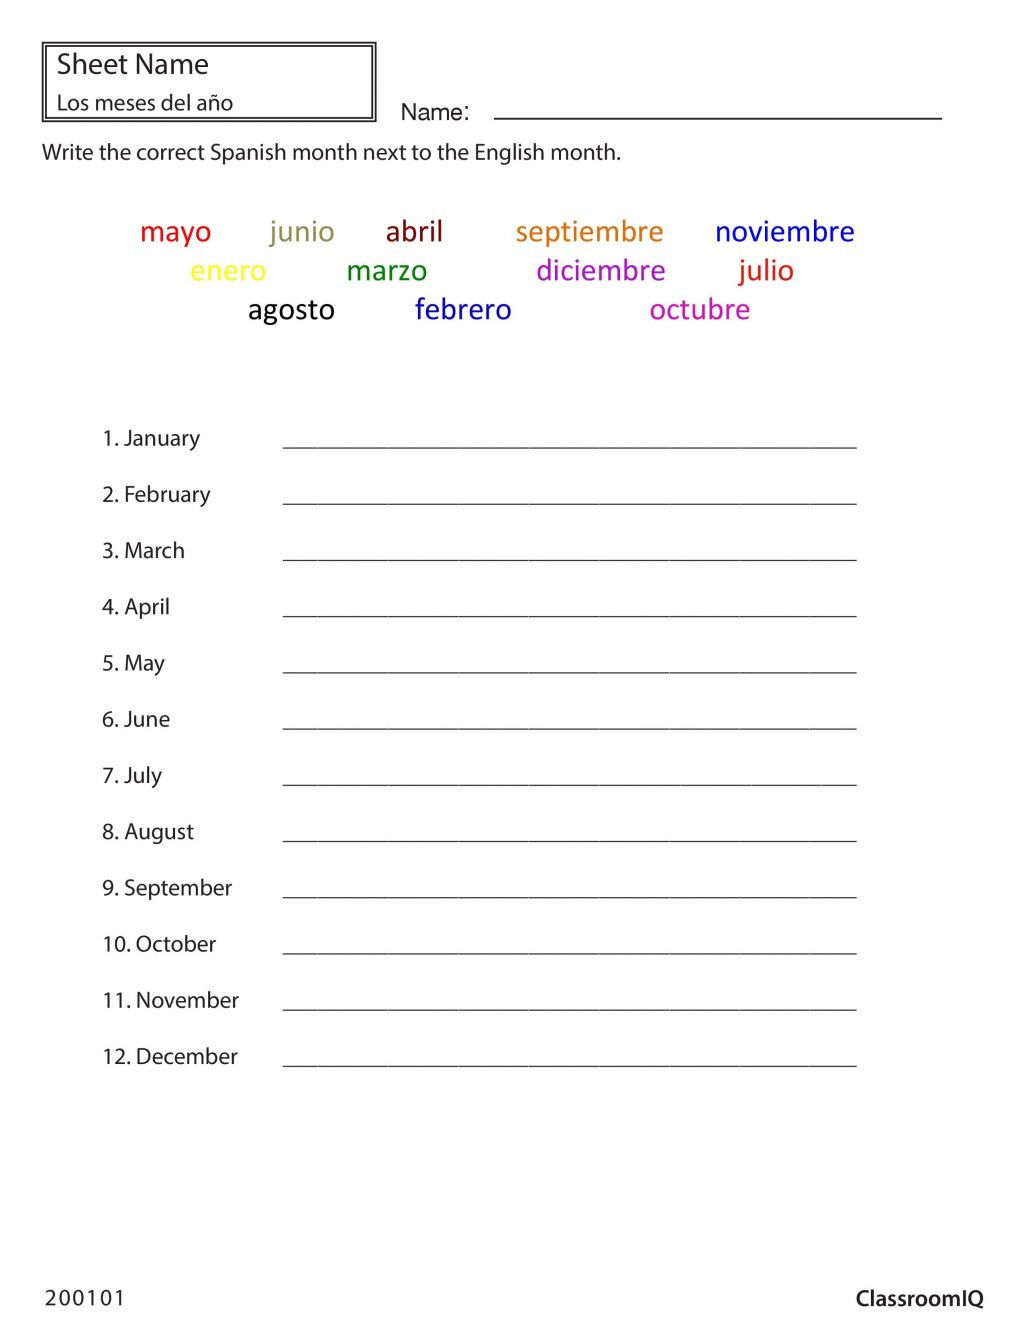 worksheet-ideas-6th-grade-spanish-curriculum-map-db-excel